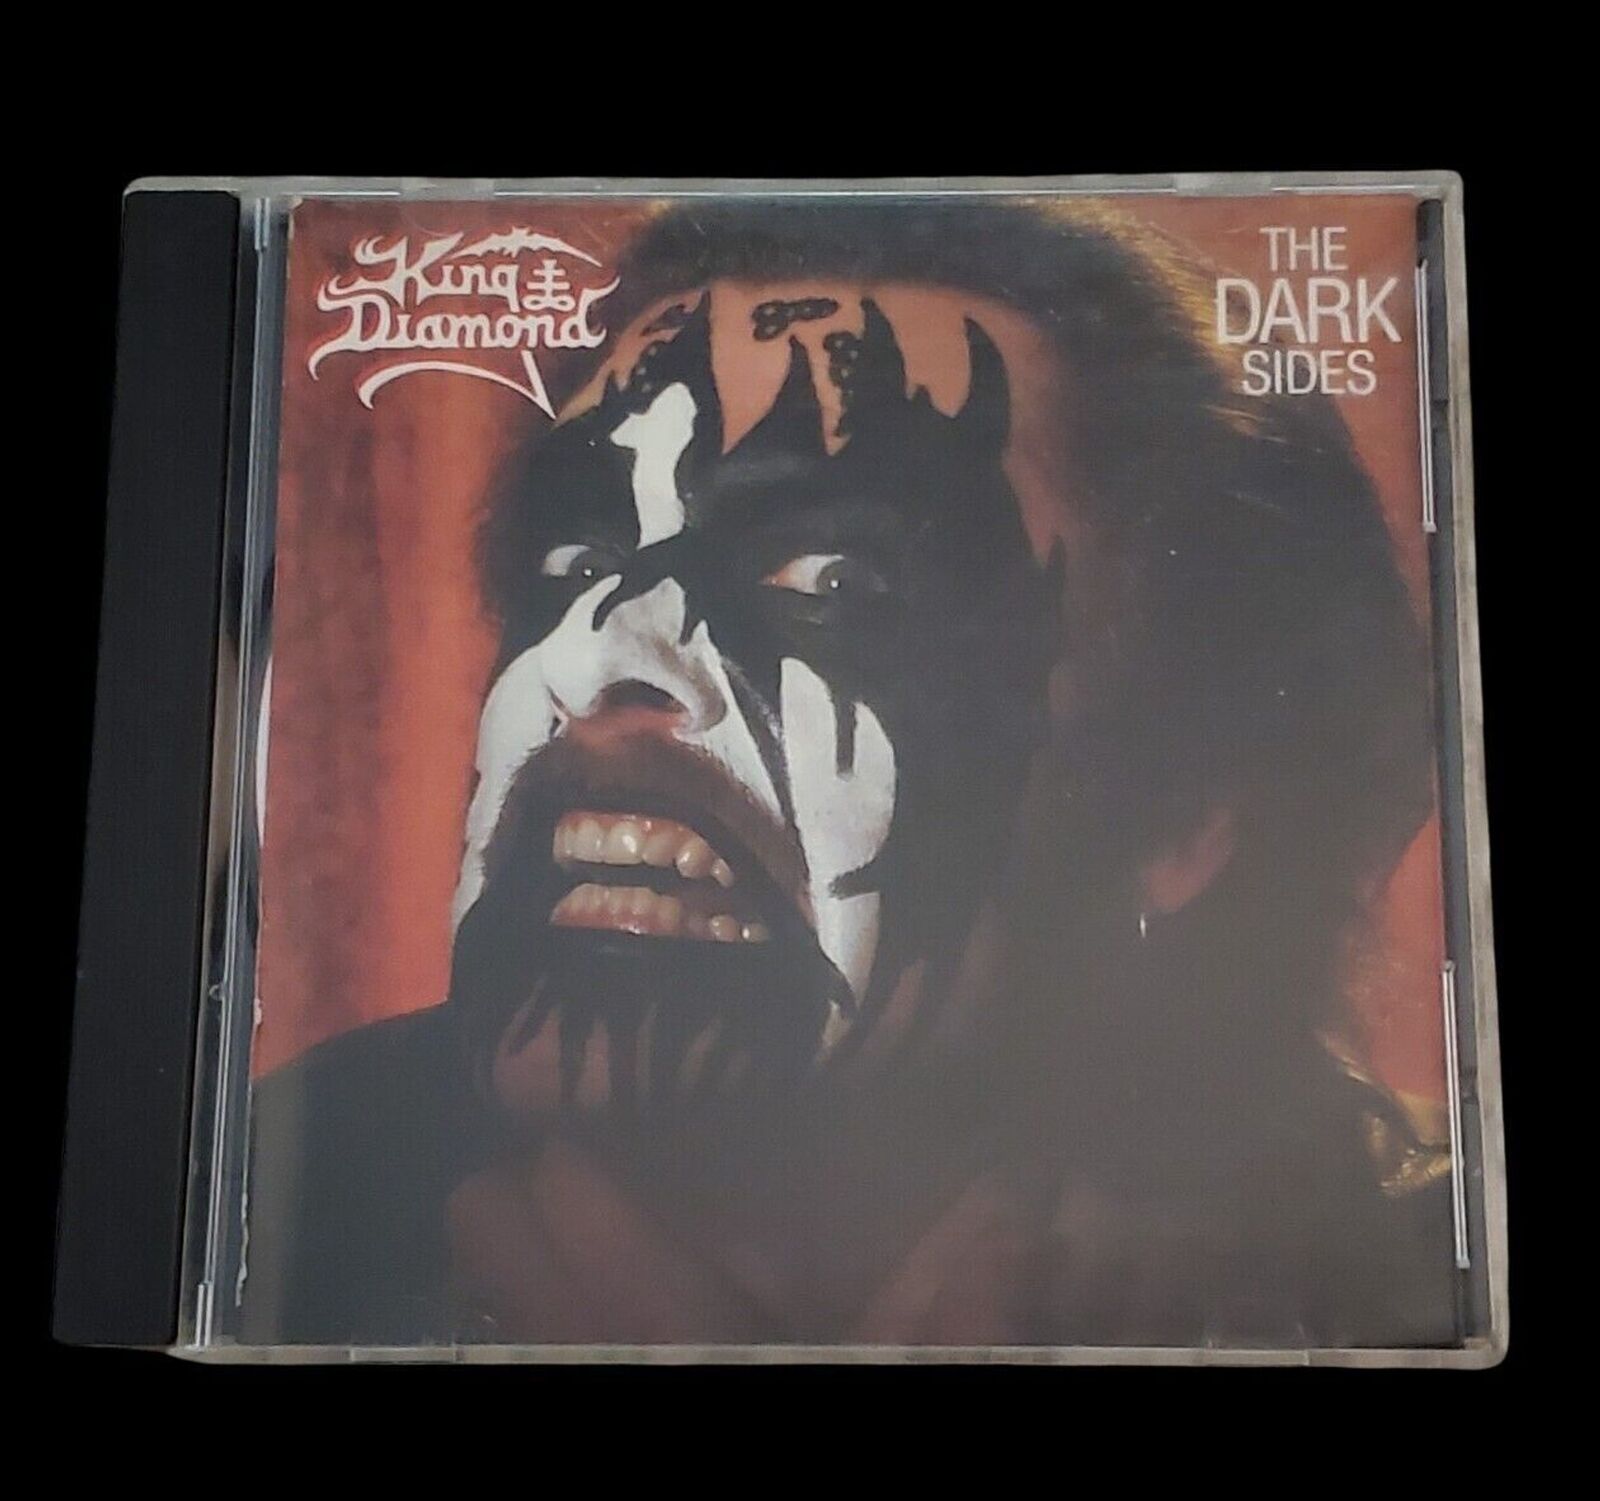 King Diamond The Dark Sides EP CD Heavy Metal Hard Rock RRD 2455 1988 Halloween